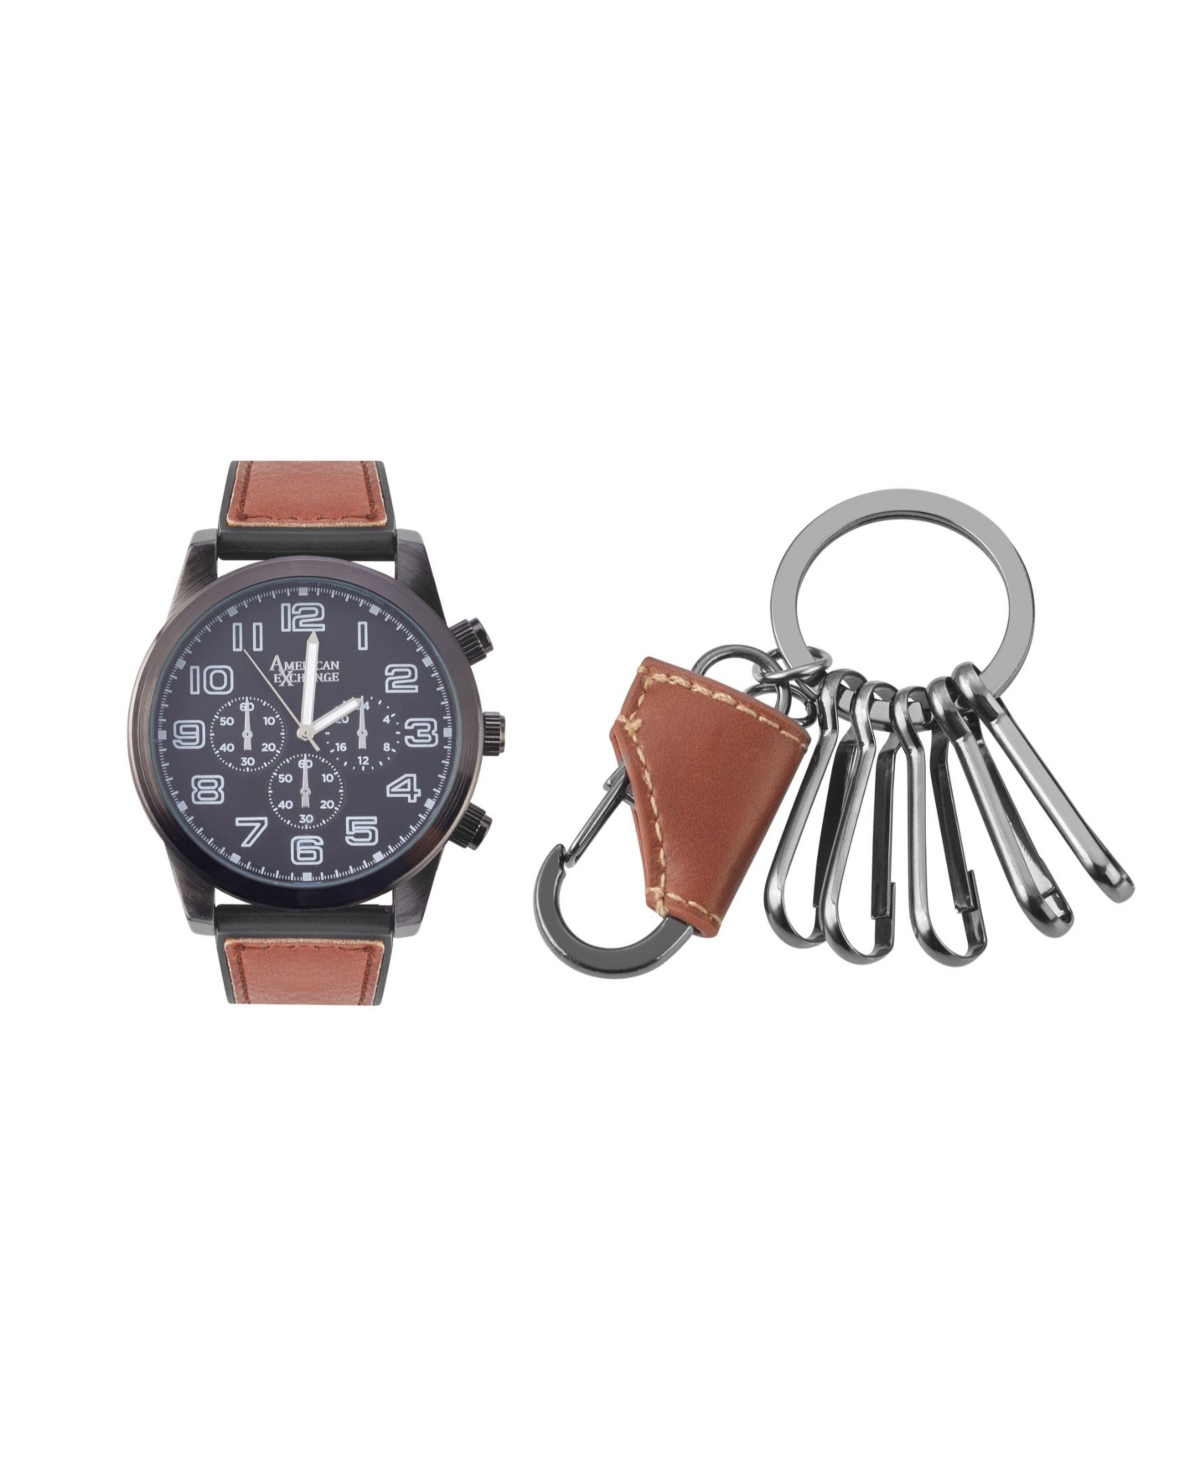 Men's Quartz Movement Cognac Leather Strap Analog Watch, 48mm and Keychain with Zippered Travel Pouch - Cognac, Matte Black